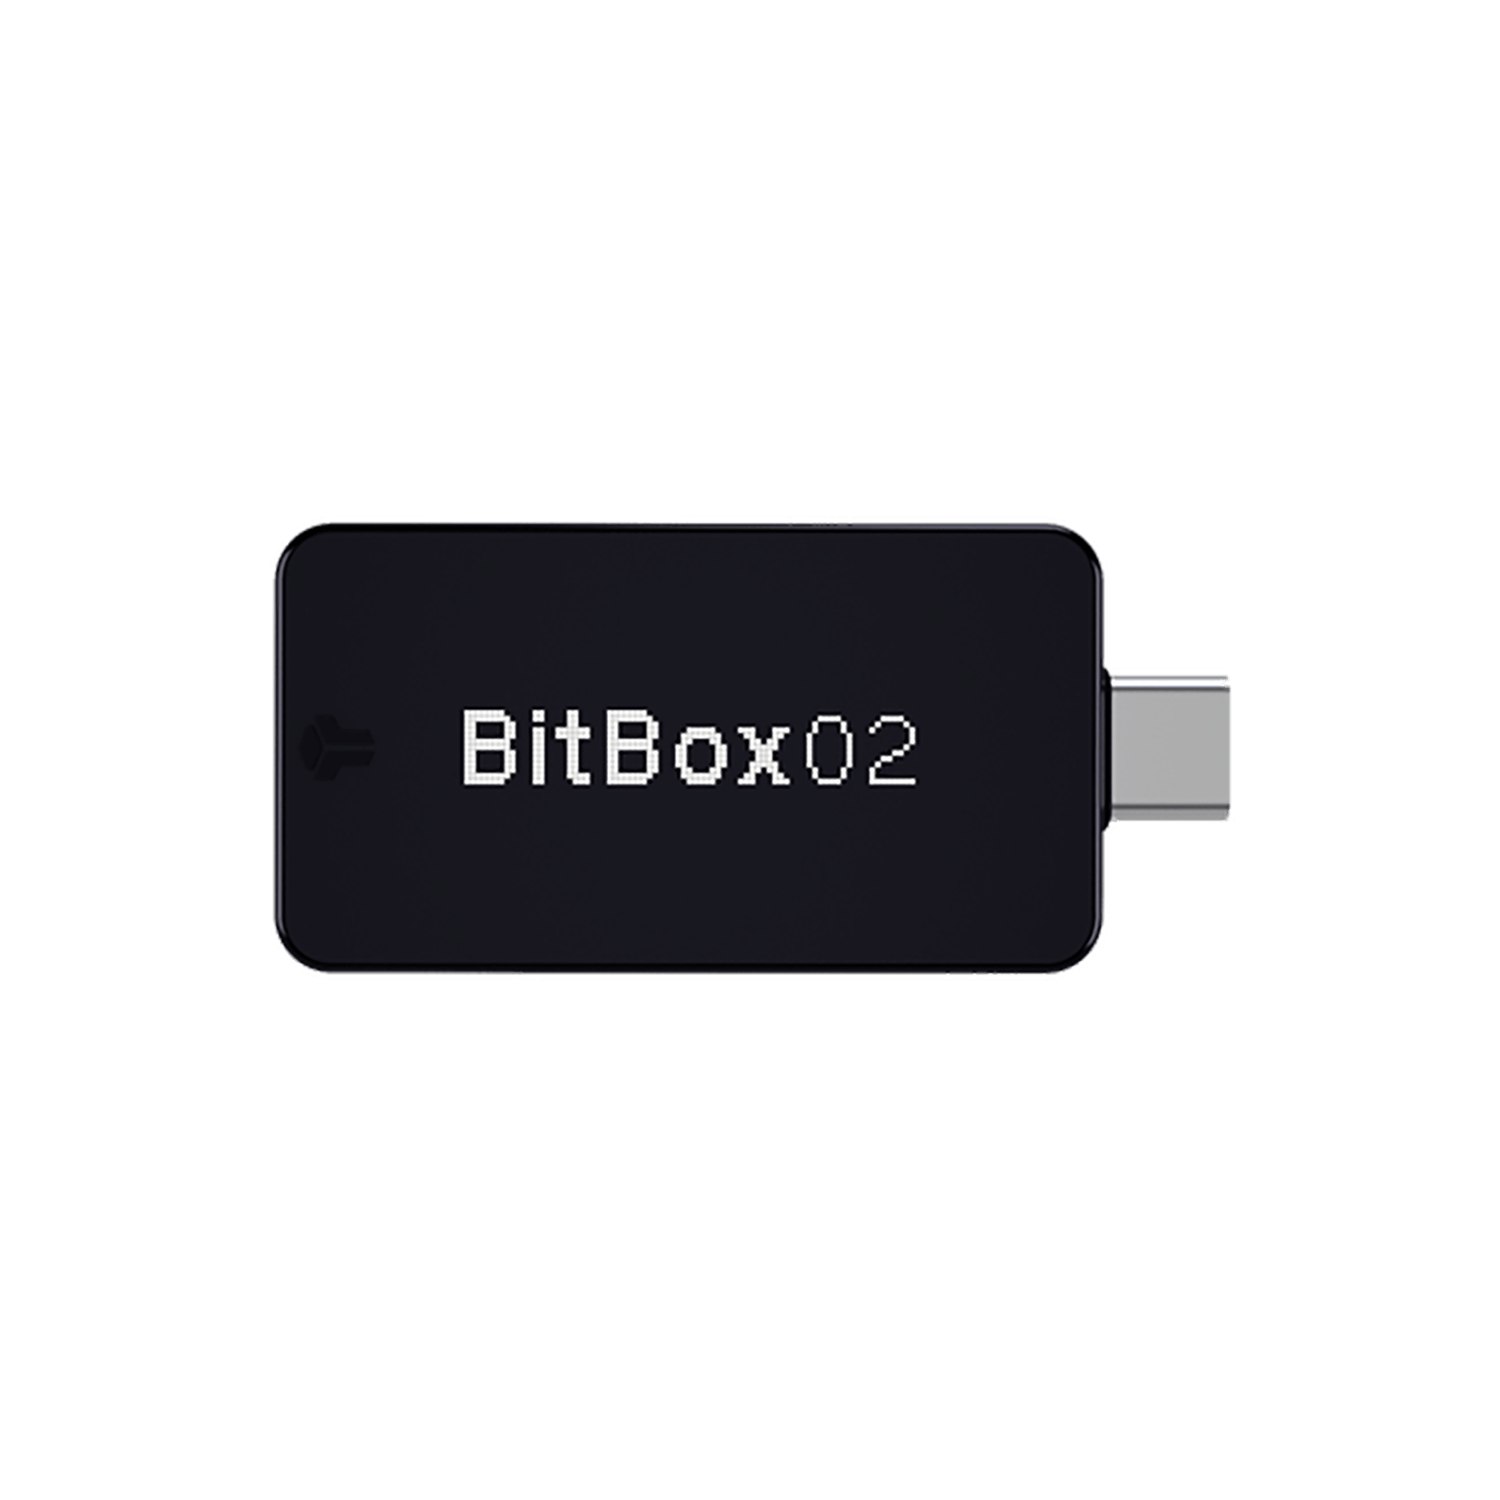 BitBox 02 Multi edition